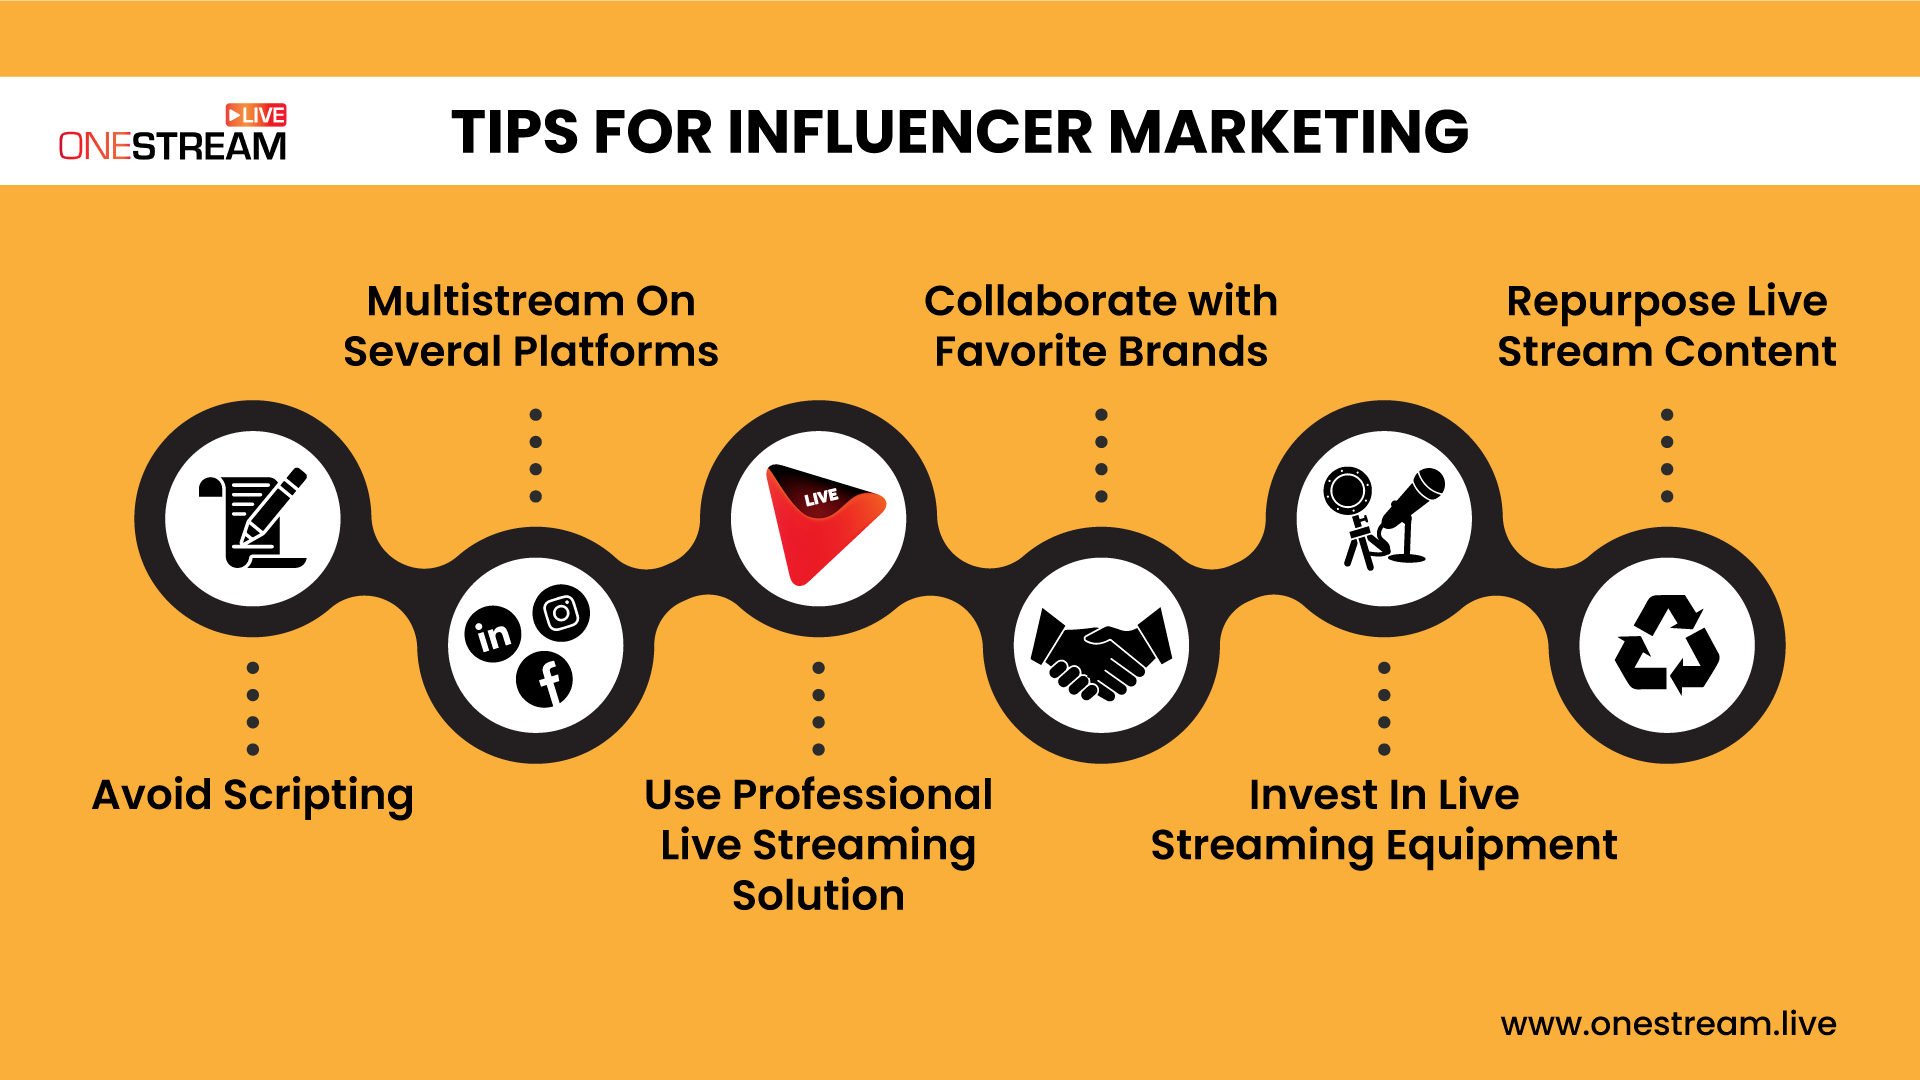 Tips for influencer marketing